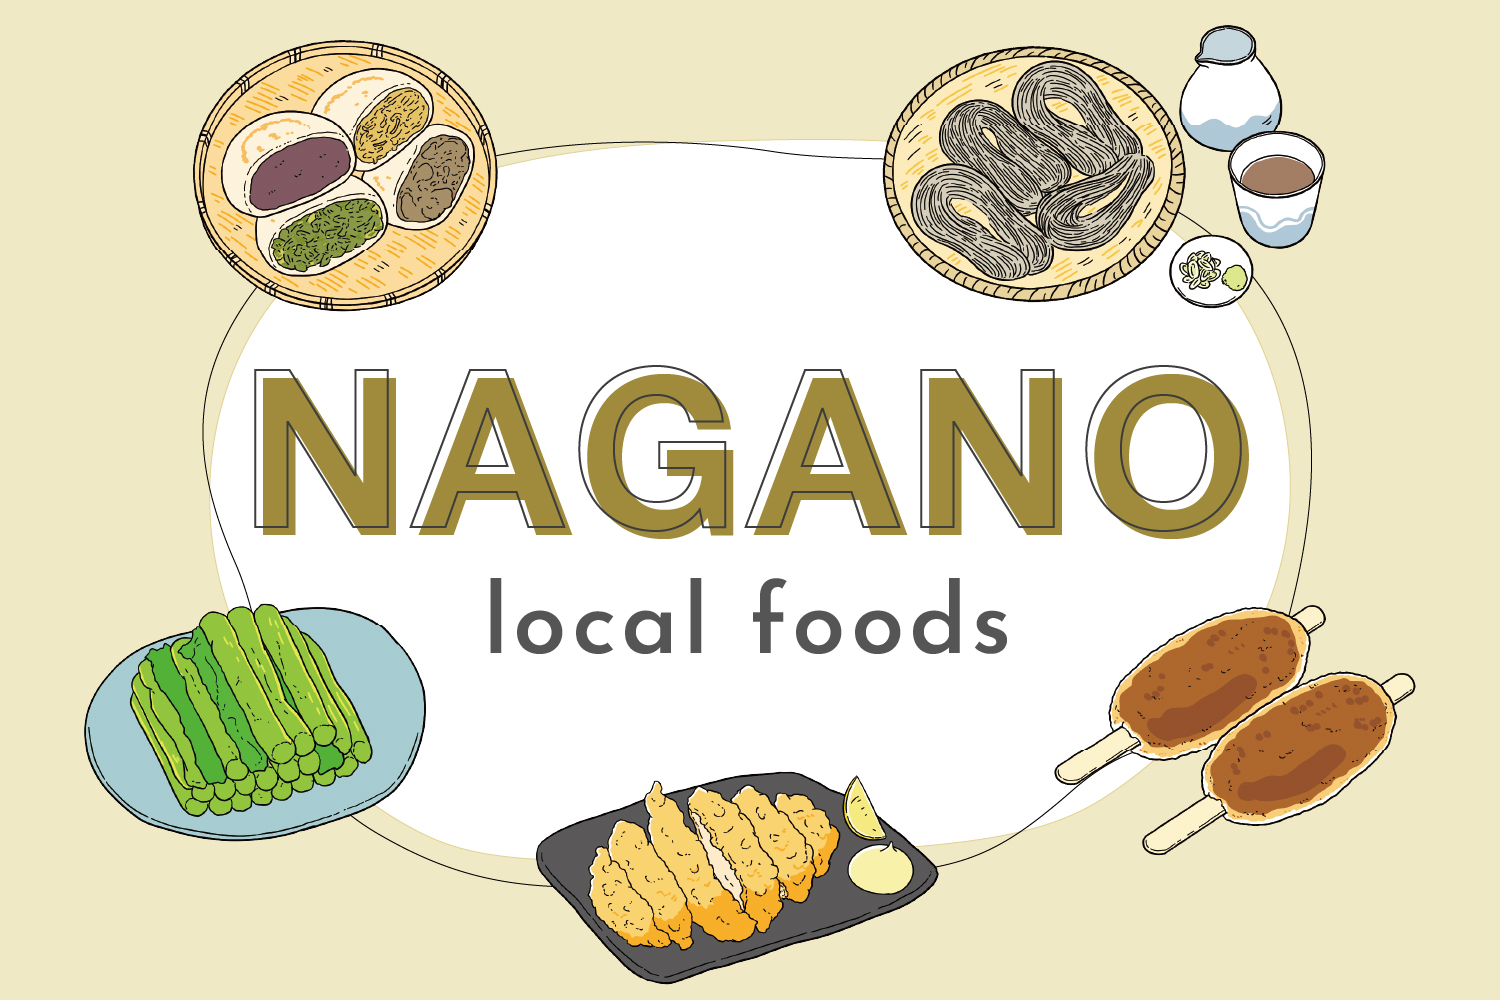 5 Local foods in Nagano | Shinshu Soba, Nozawana, Oyaki, Gohei-mochi, and Sanzokuyaki